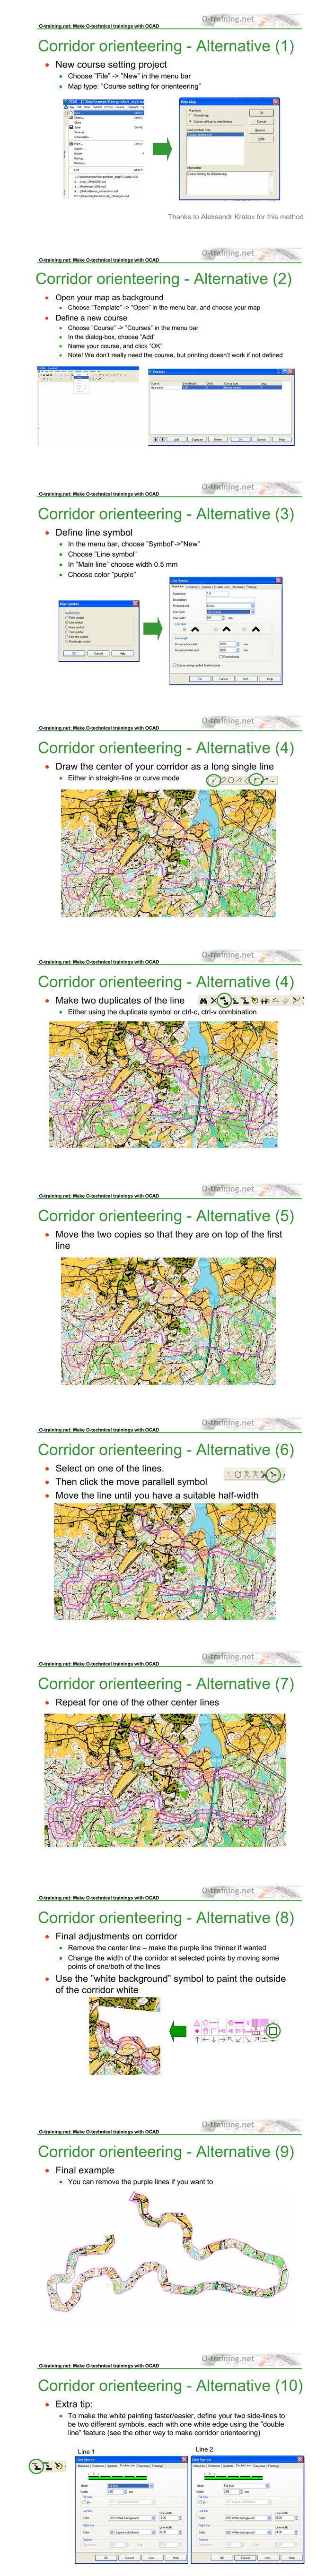 Image:Corridor orienteering alternative OCAD.jpg